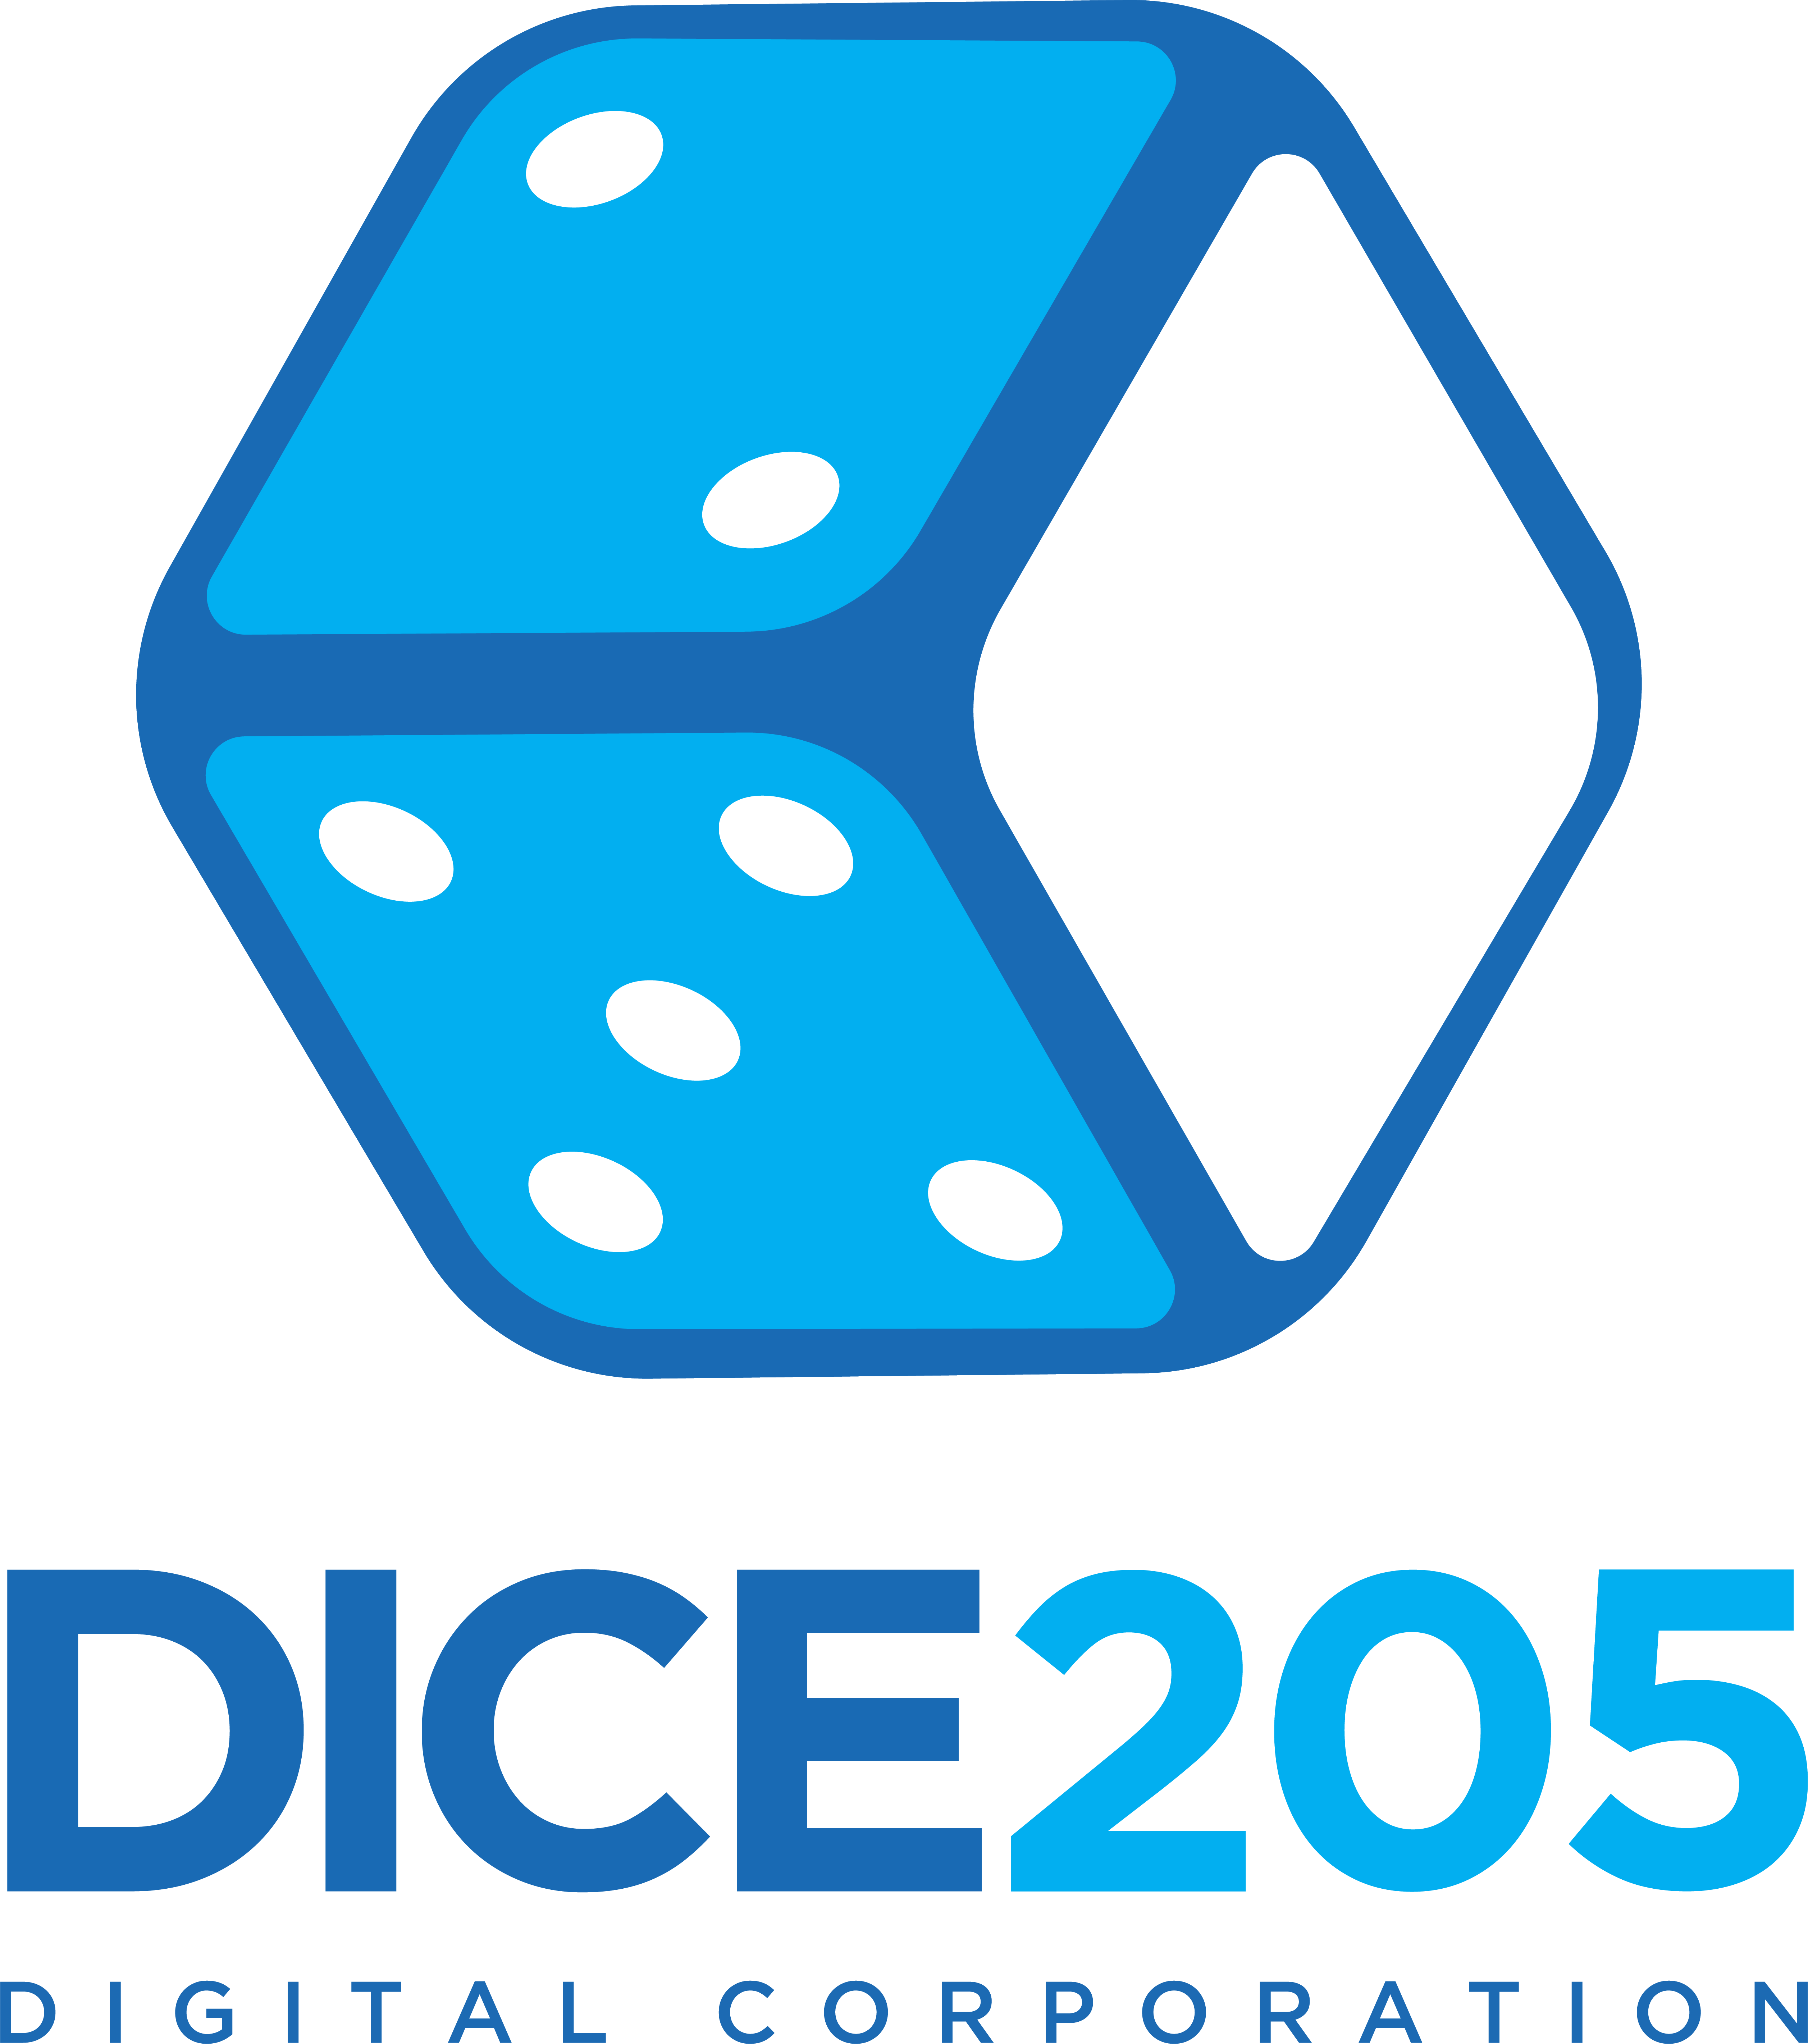 DICE205 Digital Corporation Logo Vertical